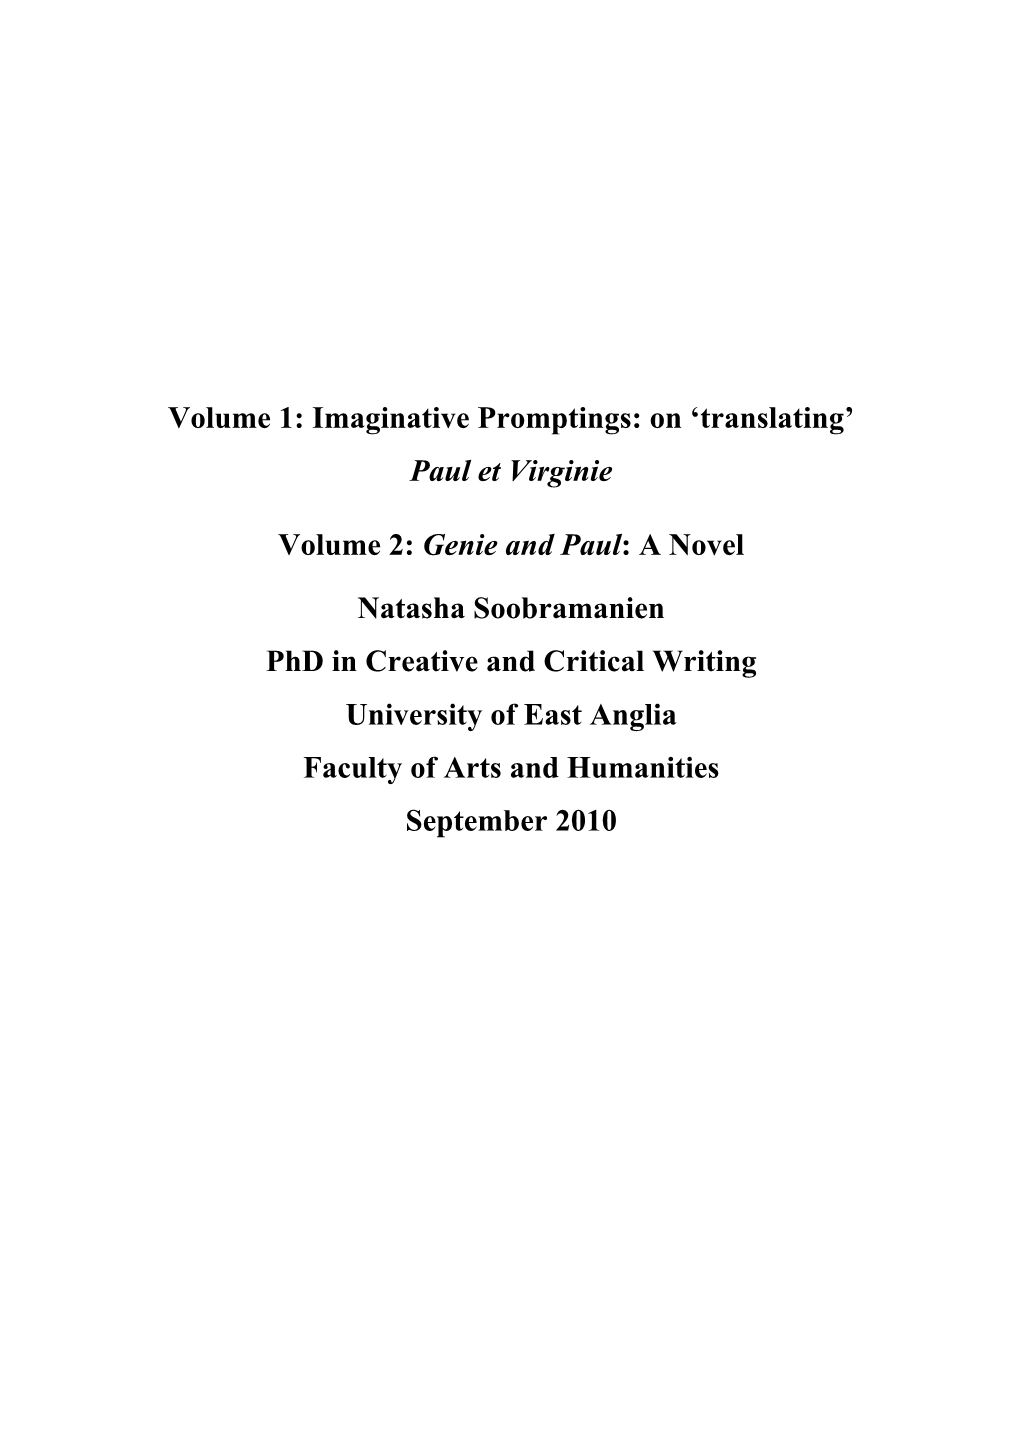 Volume 1: Imaginative Promptings: on 'Translating'